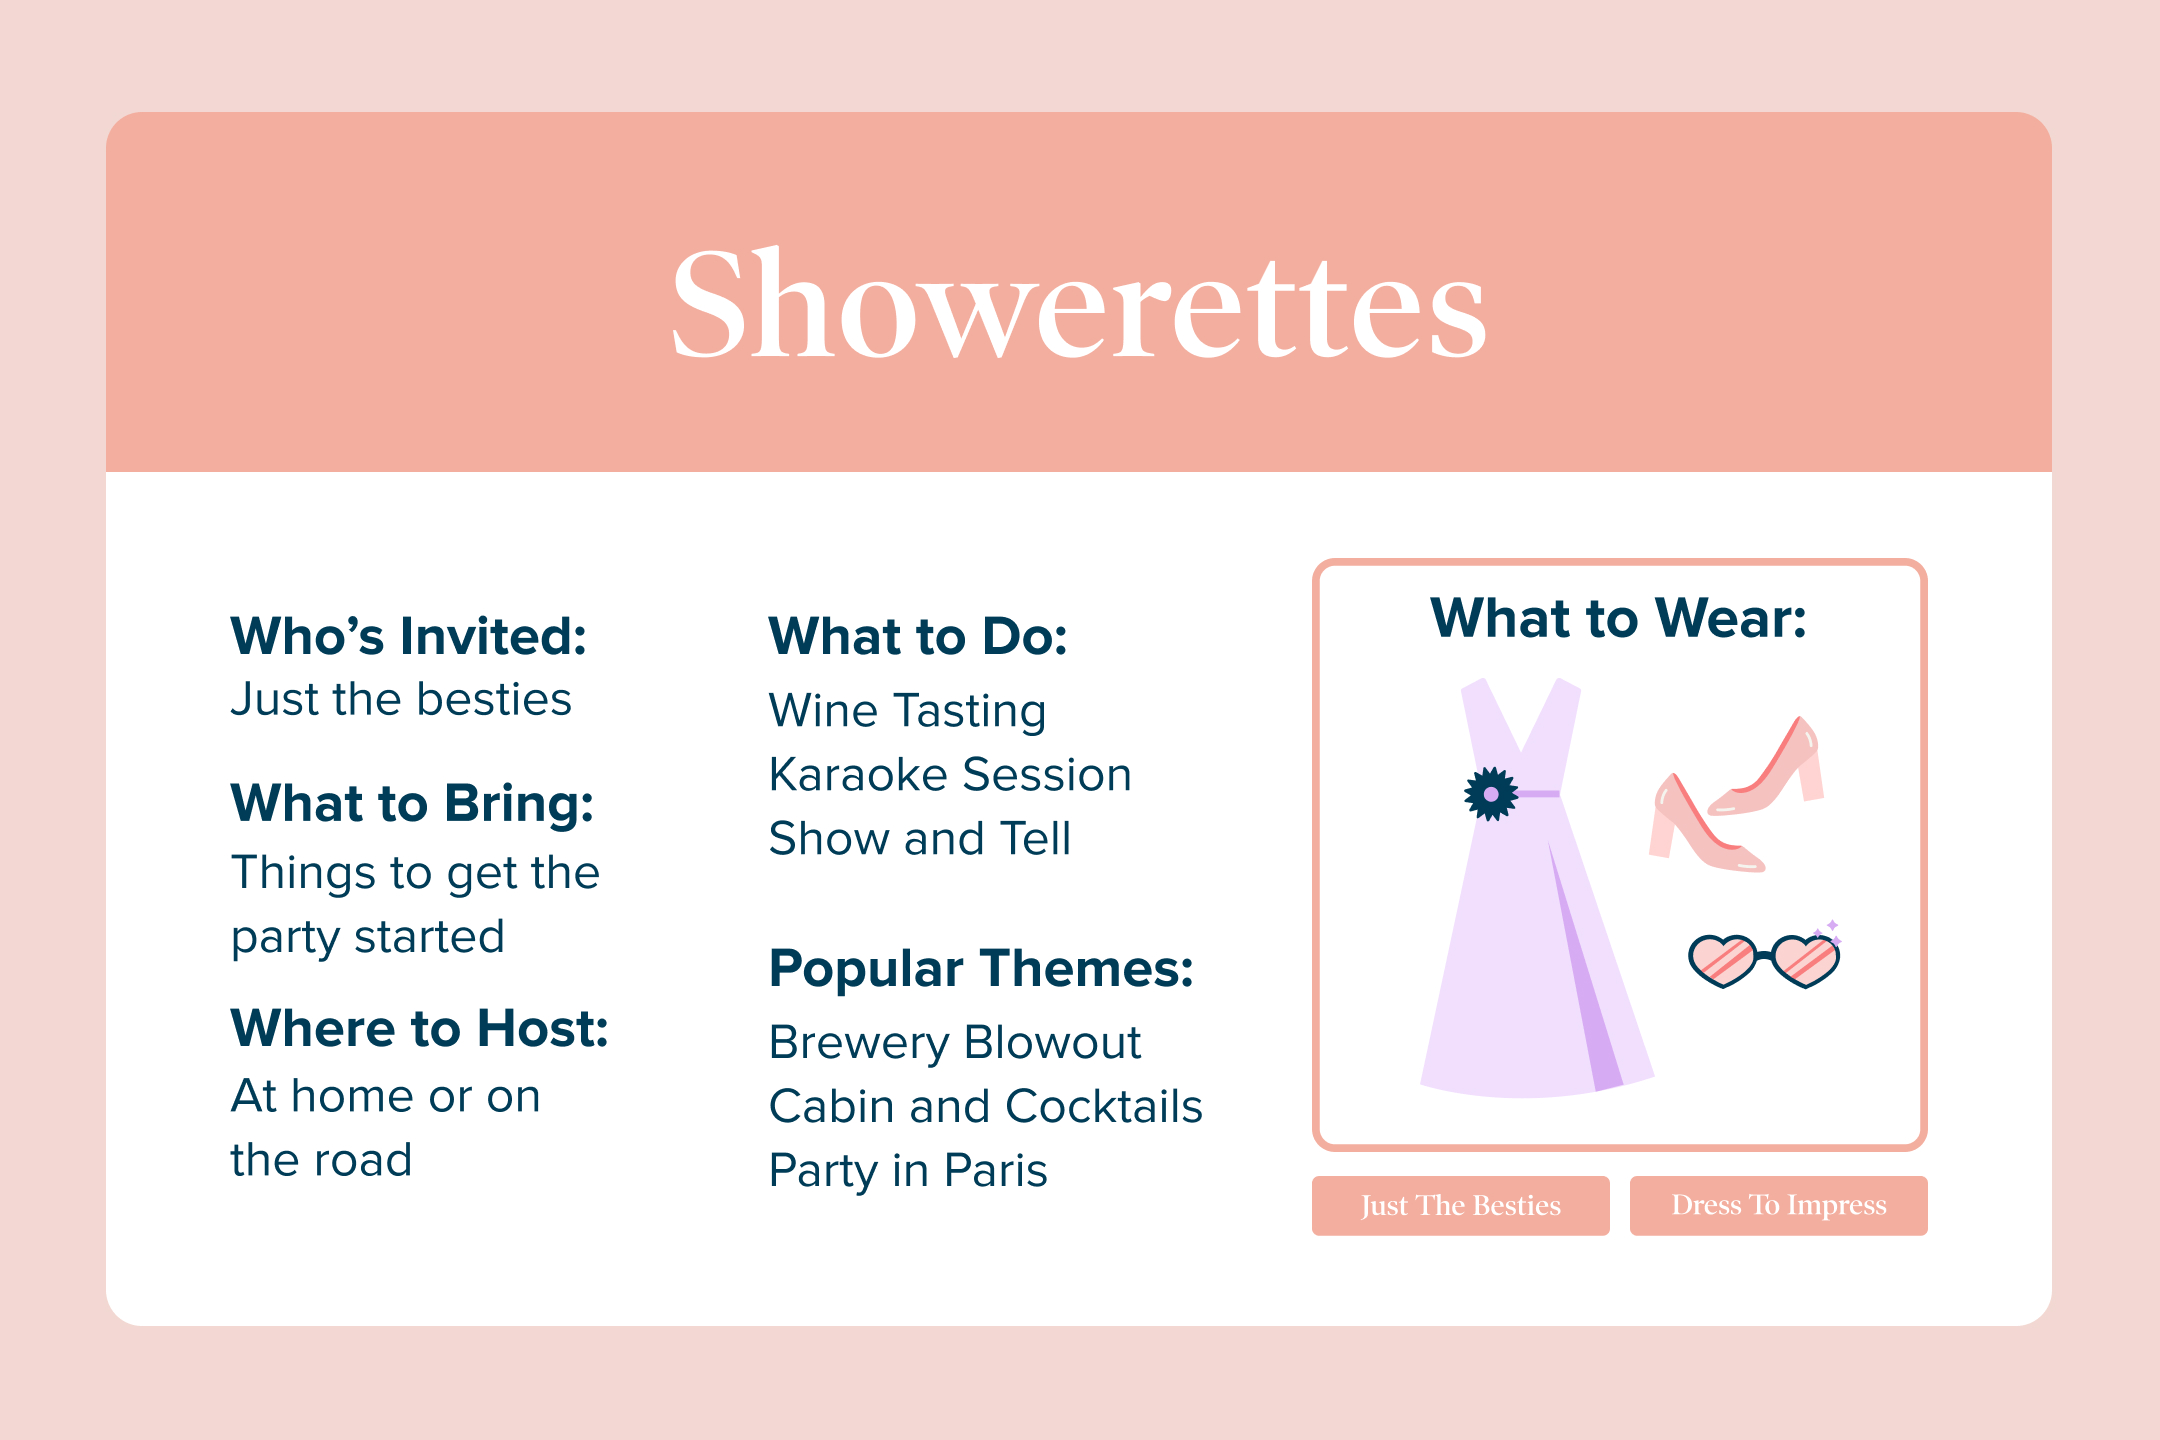 Zola Wedding Shower Styles - The Showerettes